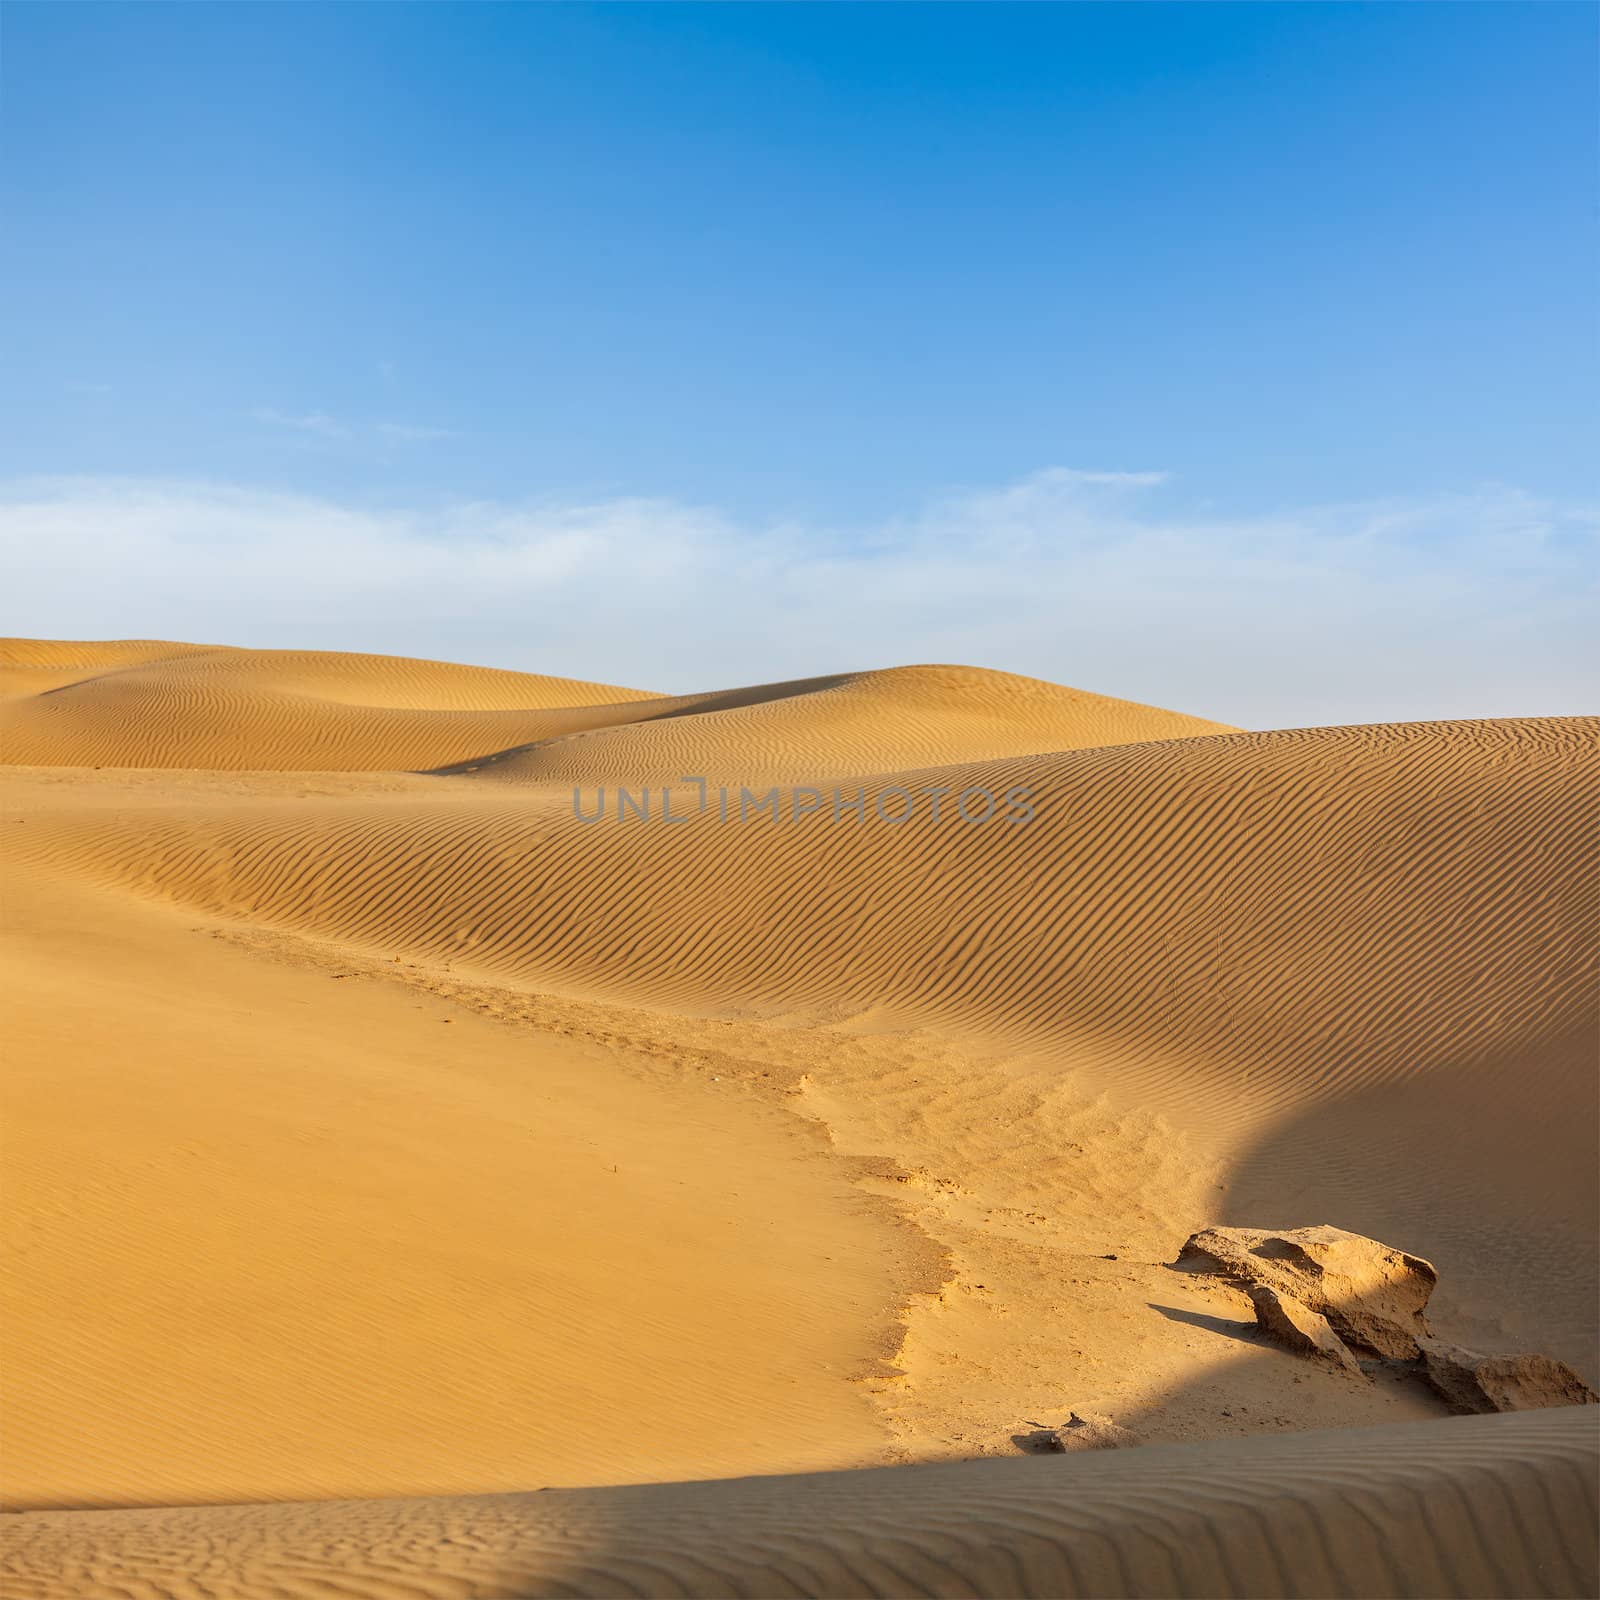 Dunes of Thar Desert, Rajasthan, India by dimol